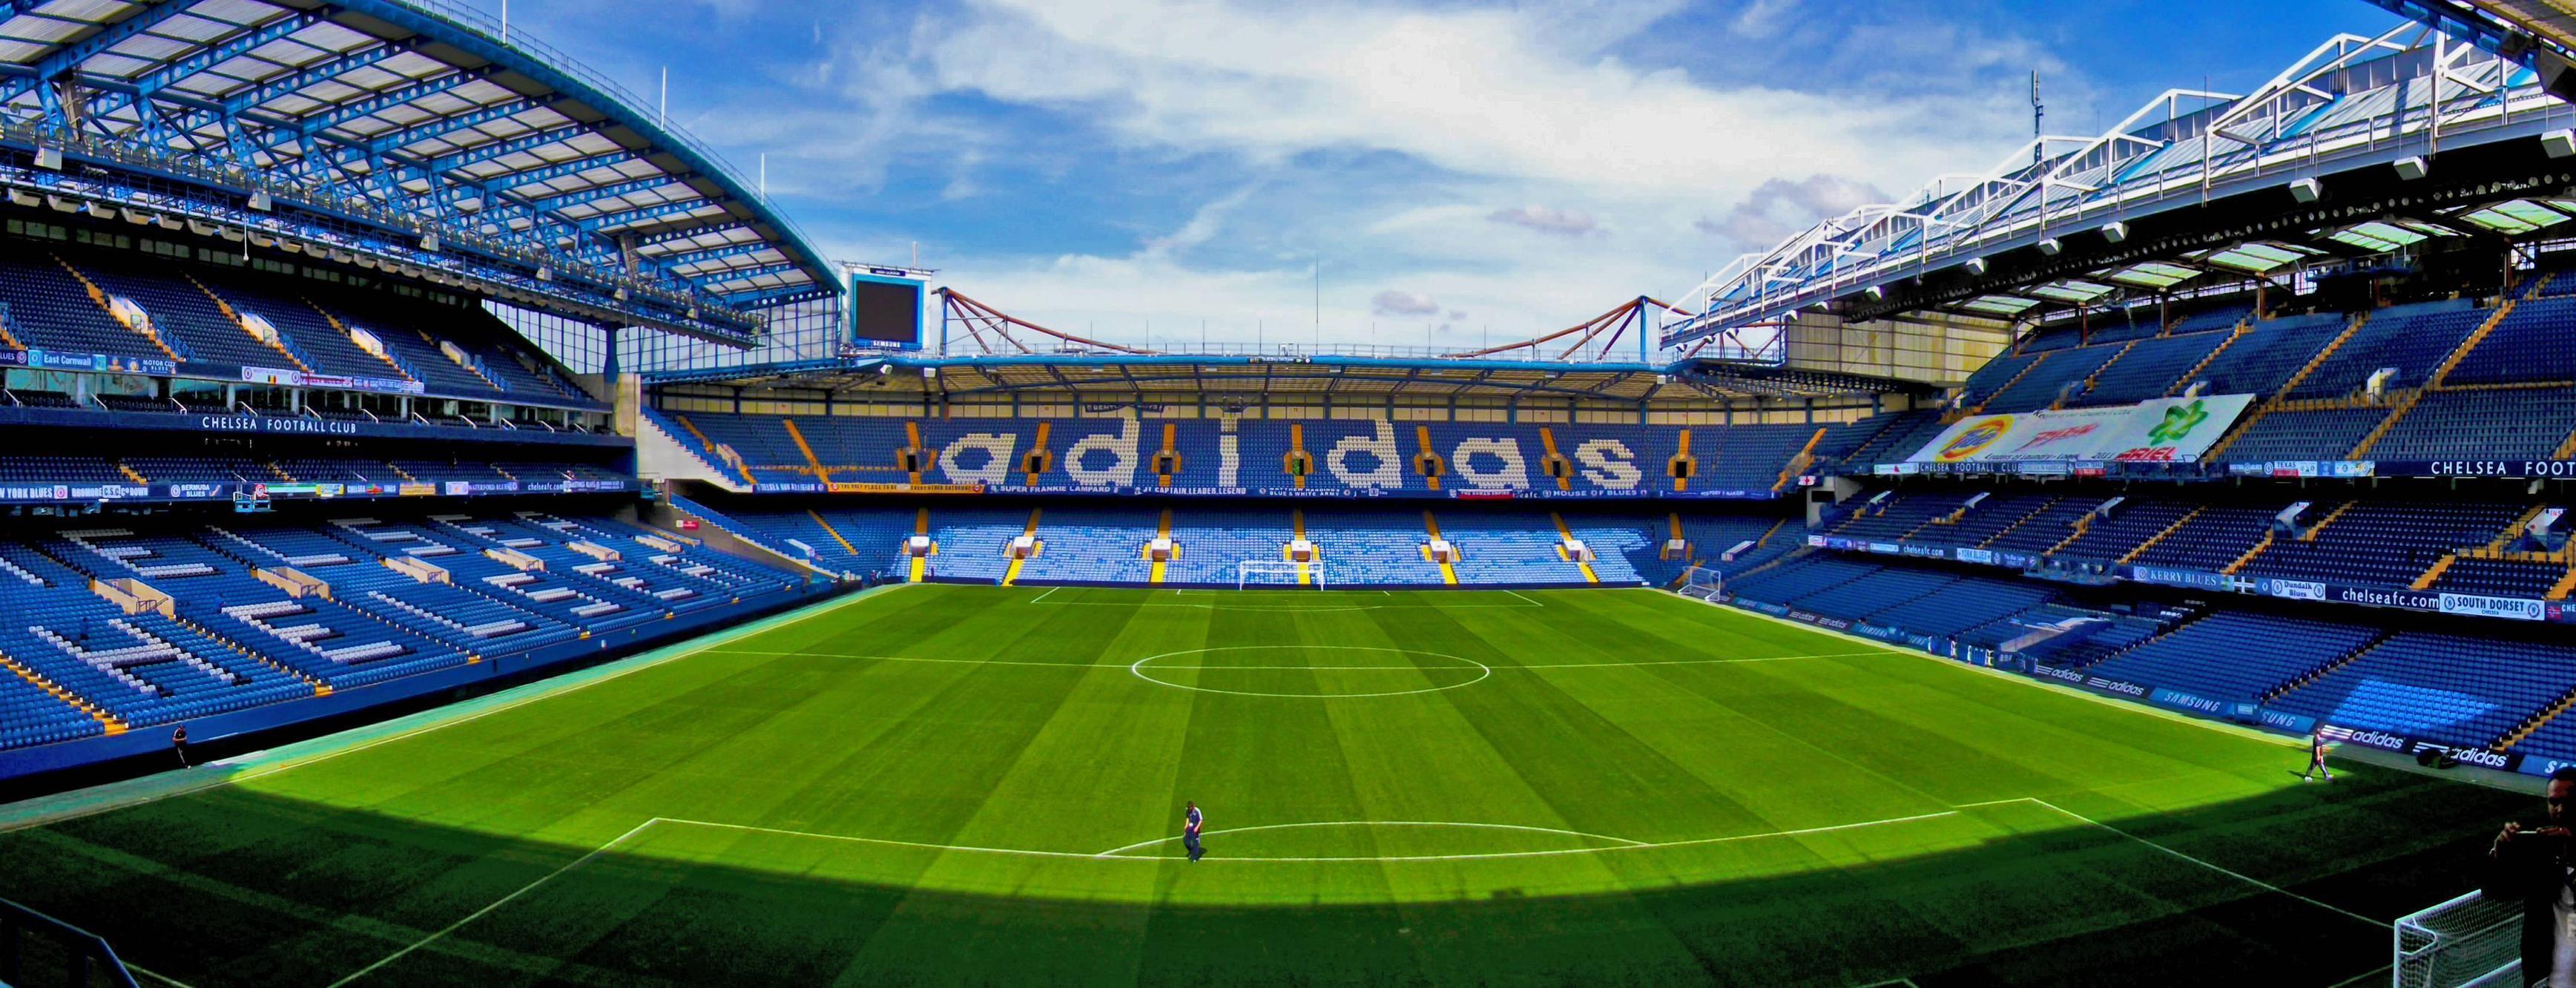 Stamford Bridge, home of Chelsea FC. Chelsea FC